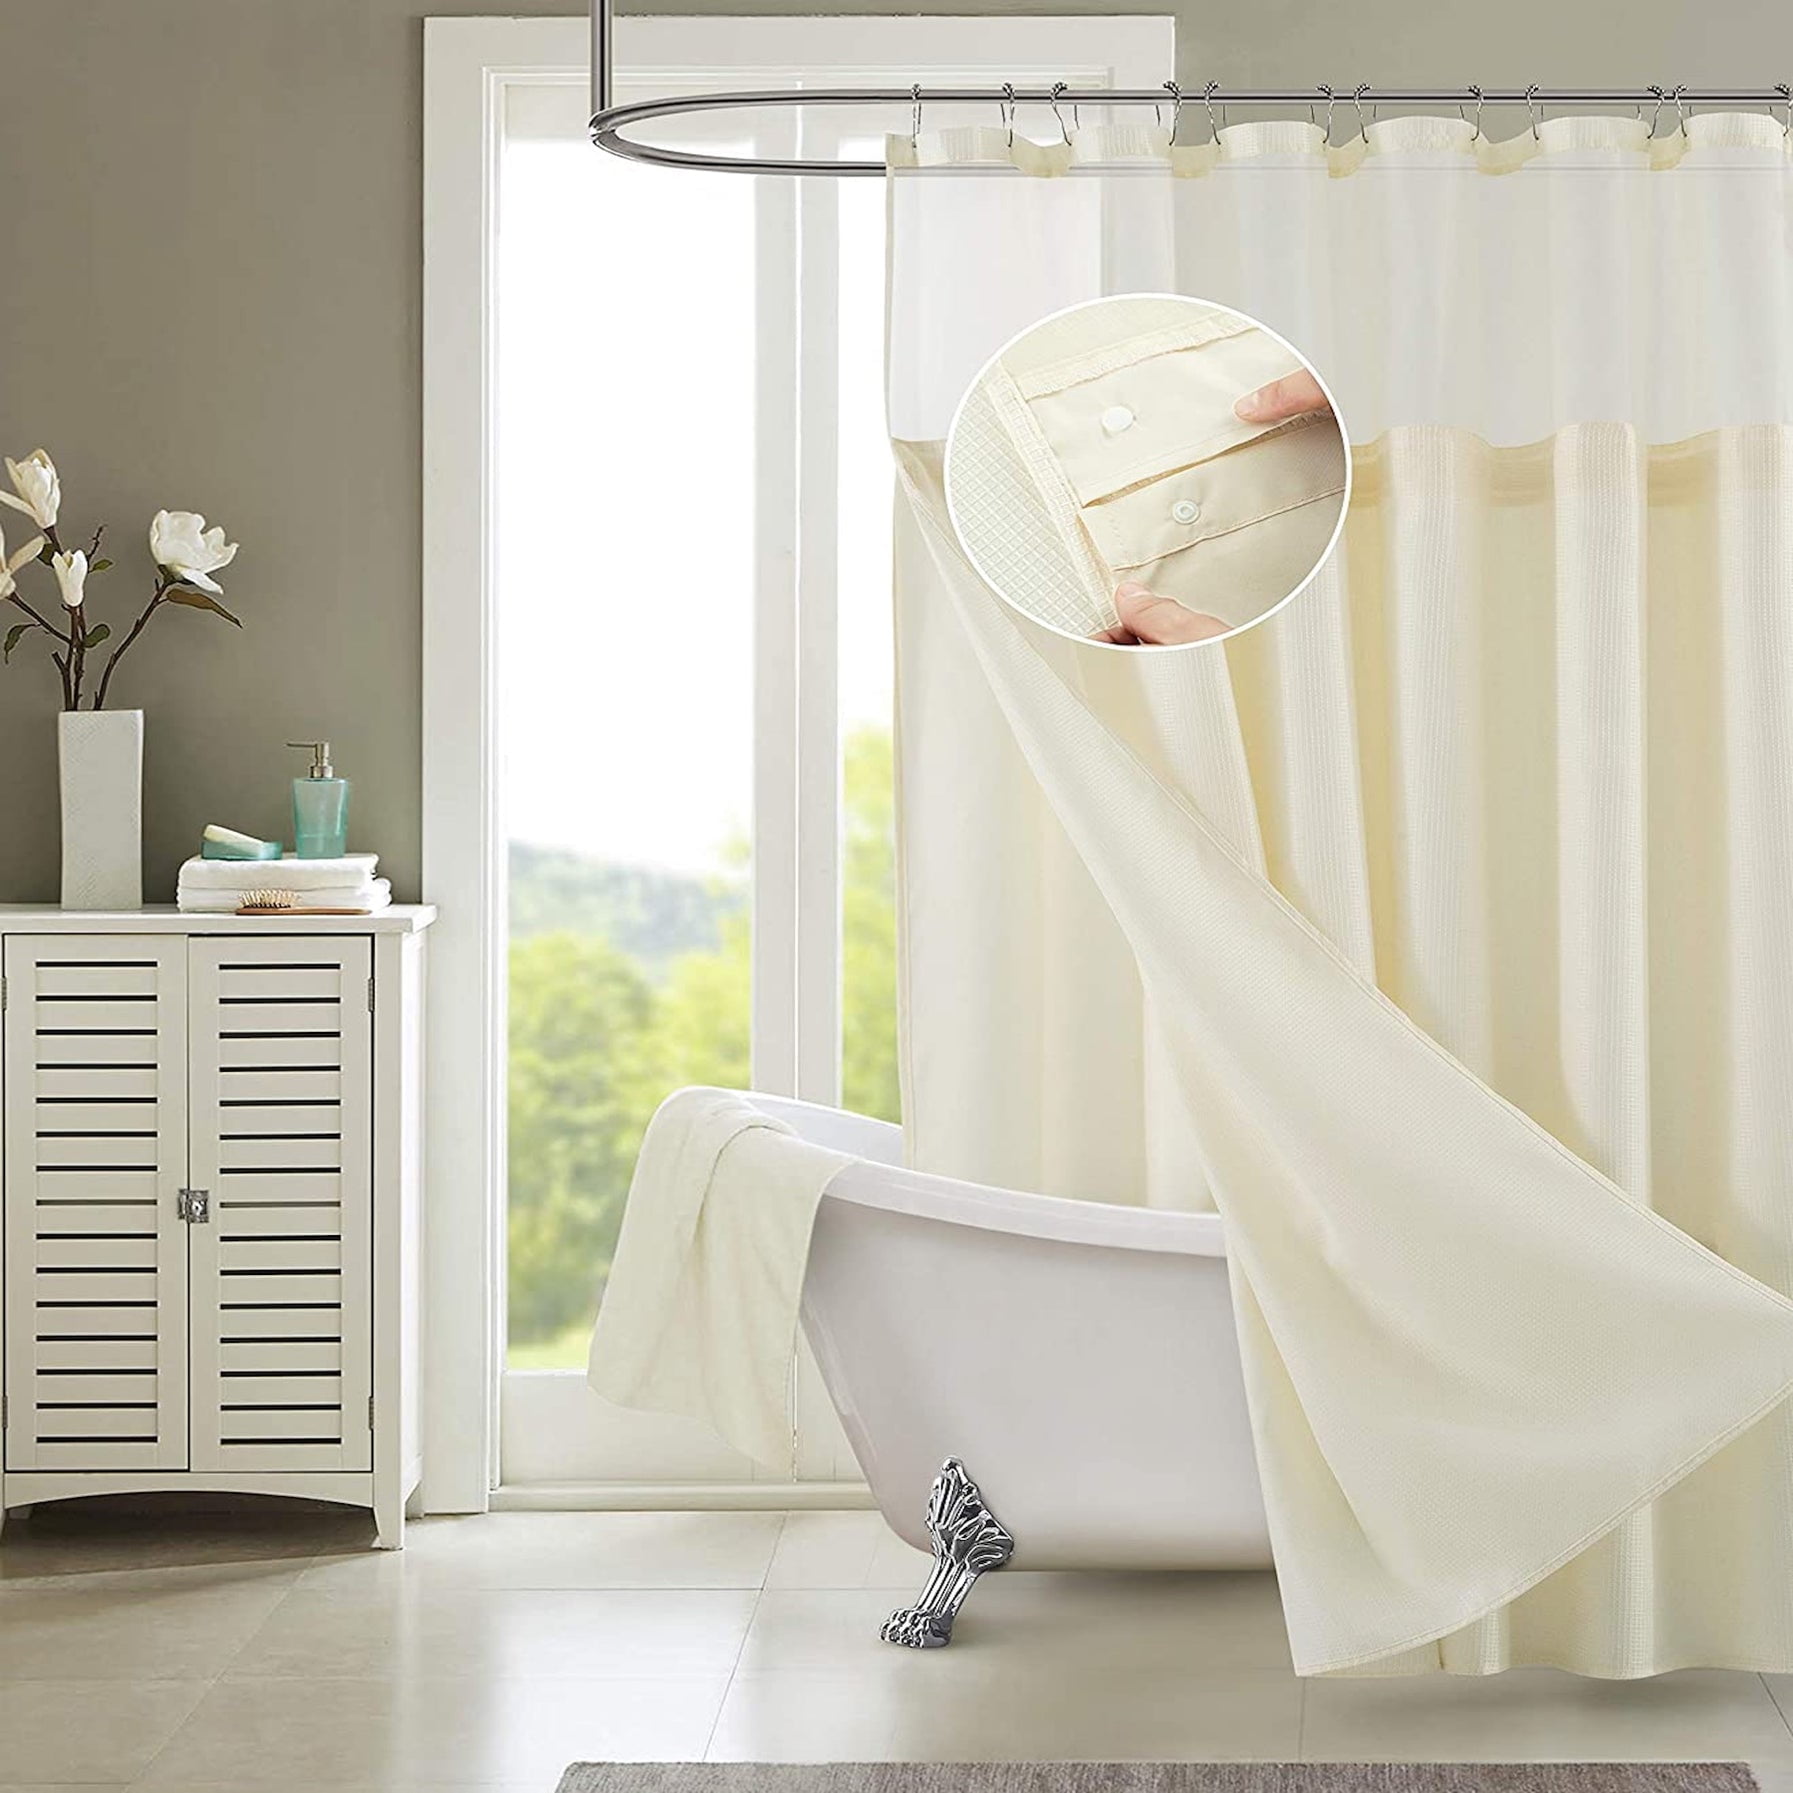 Hot Custom Merry Christmas Fabric Waterproof Bathroom Shower Curtain 60 x 72inch 